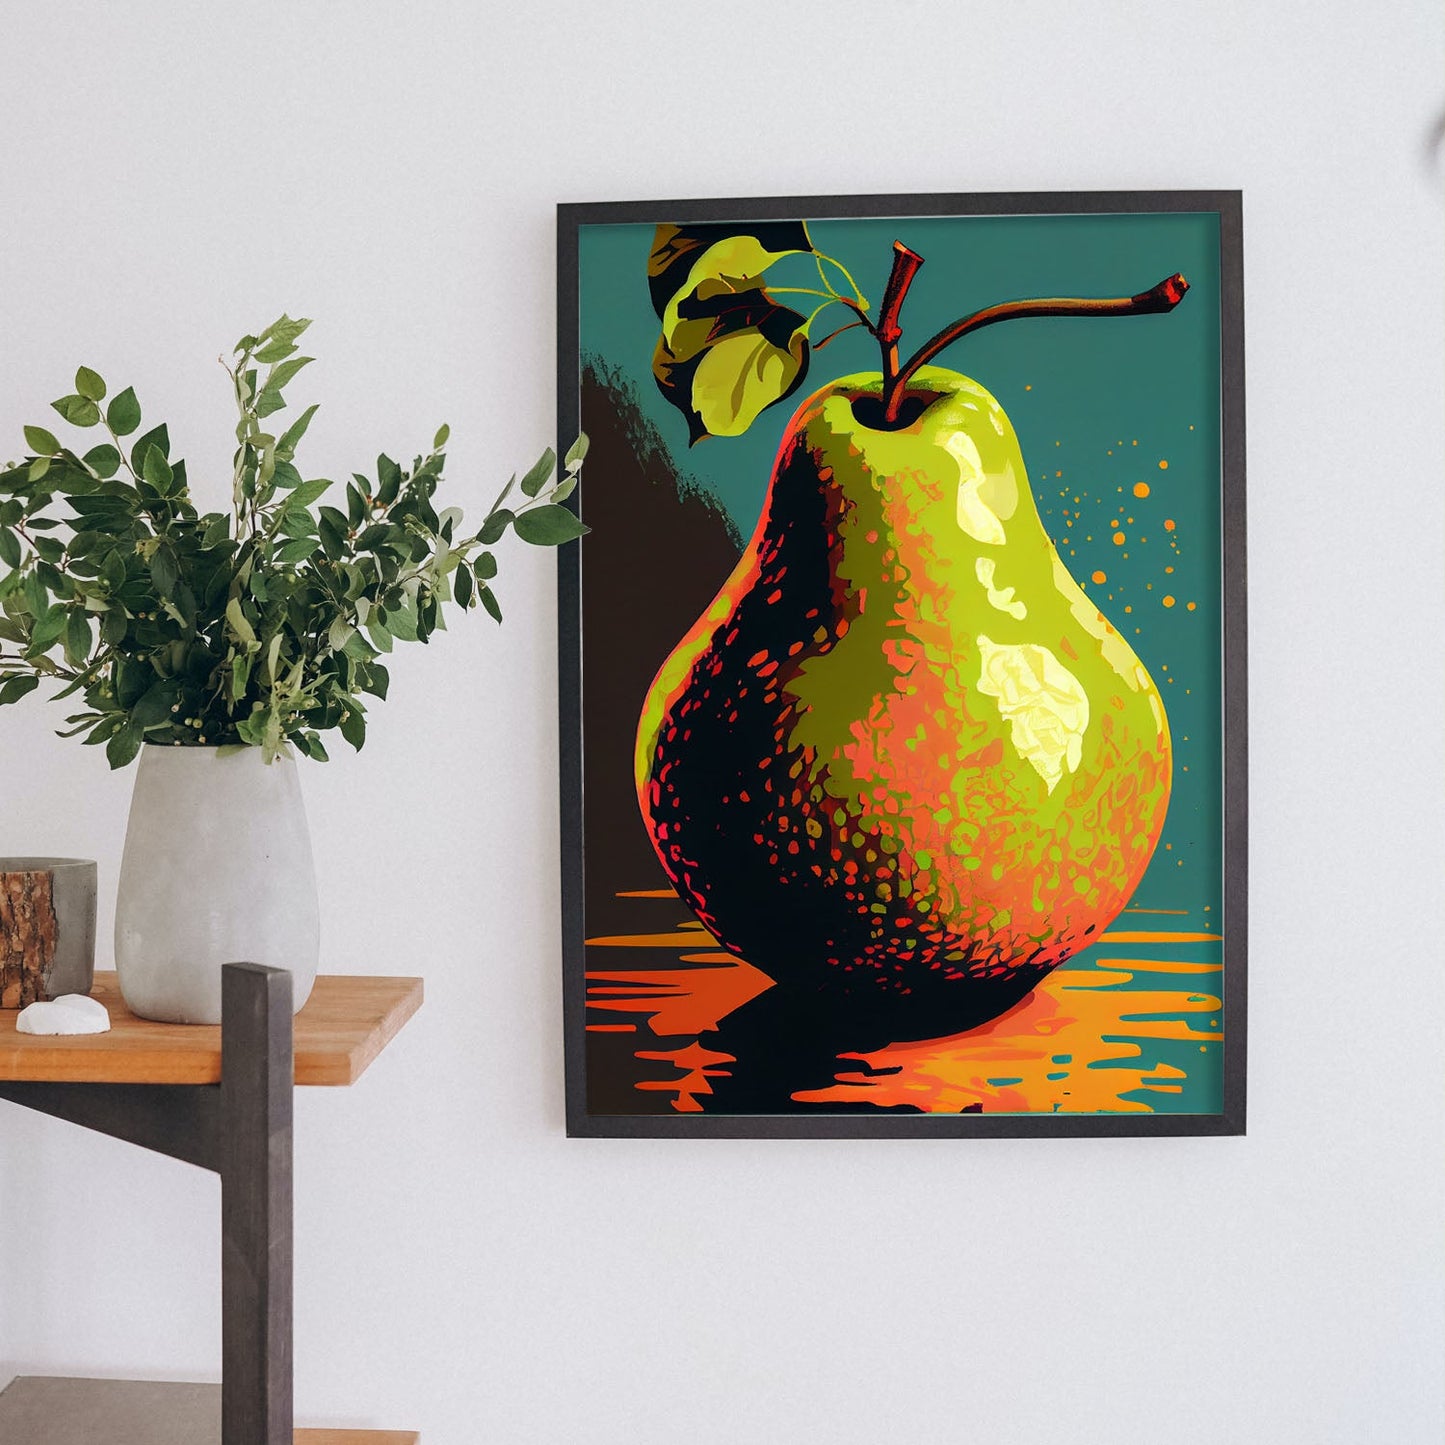 Nacnic Pear Pop Art_2. Aesthetic Wall Art Prints for Bedroom or Living Room Design.